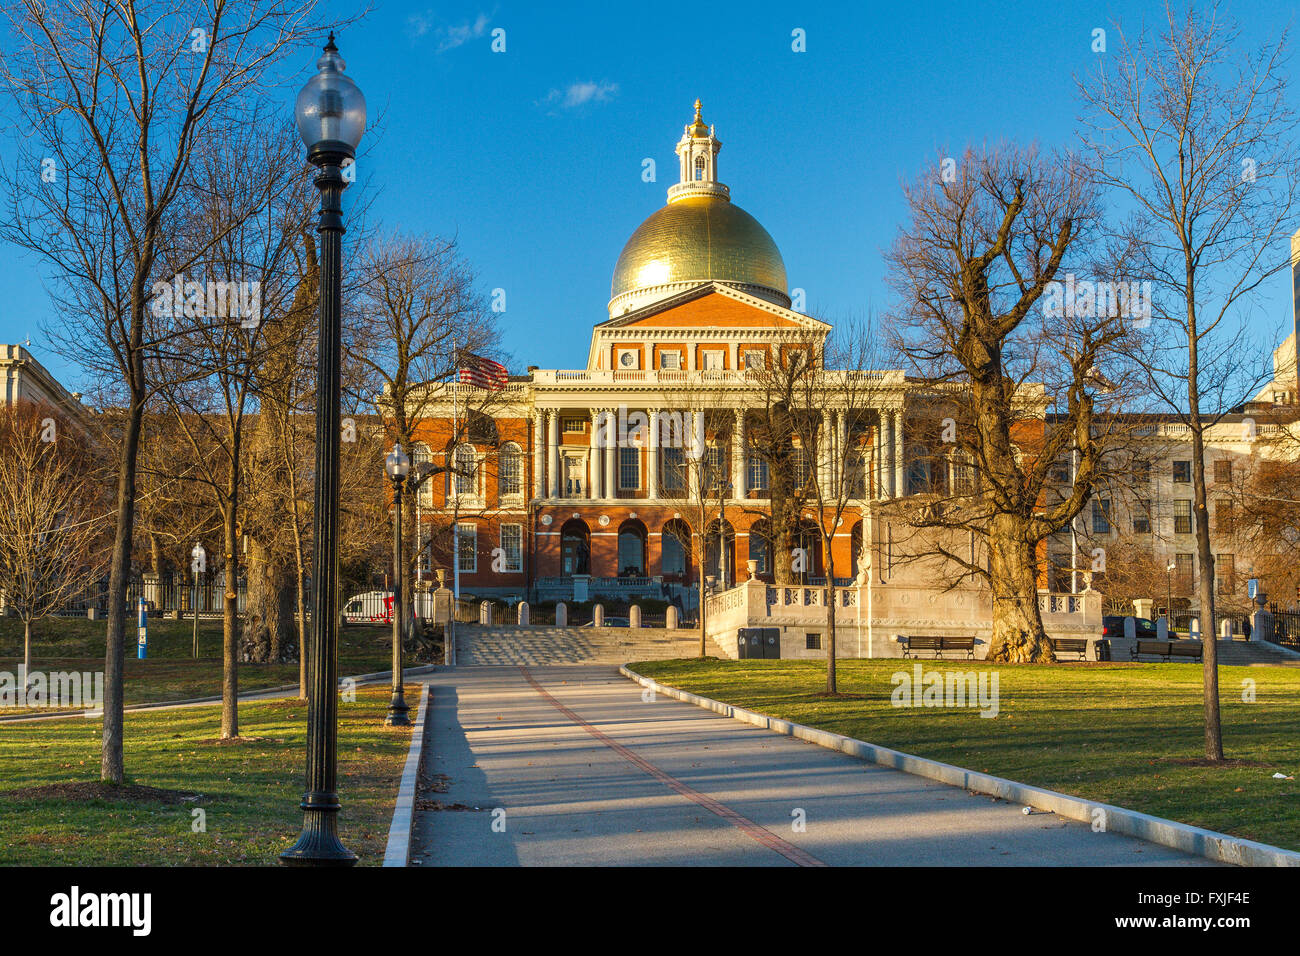 The Golden Dome of The Massachusetts State House,Boston Common, Boston, MA , USA Stock Photo